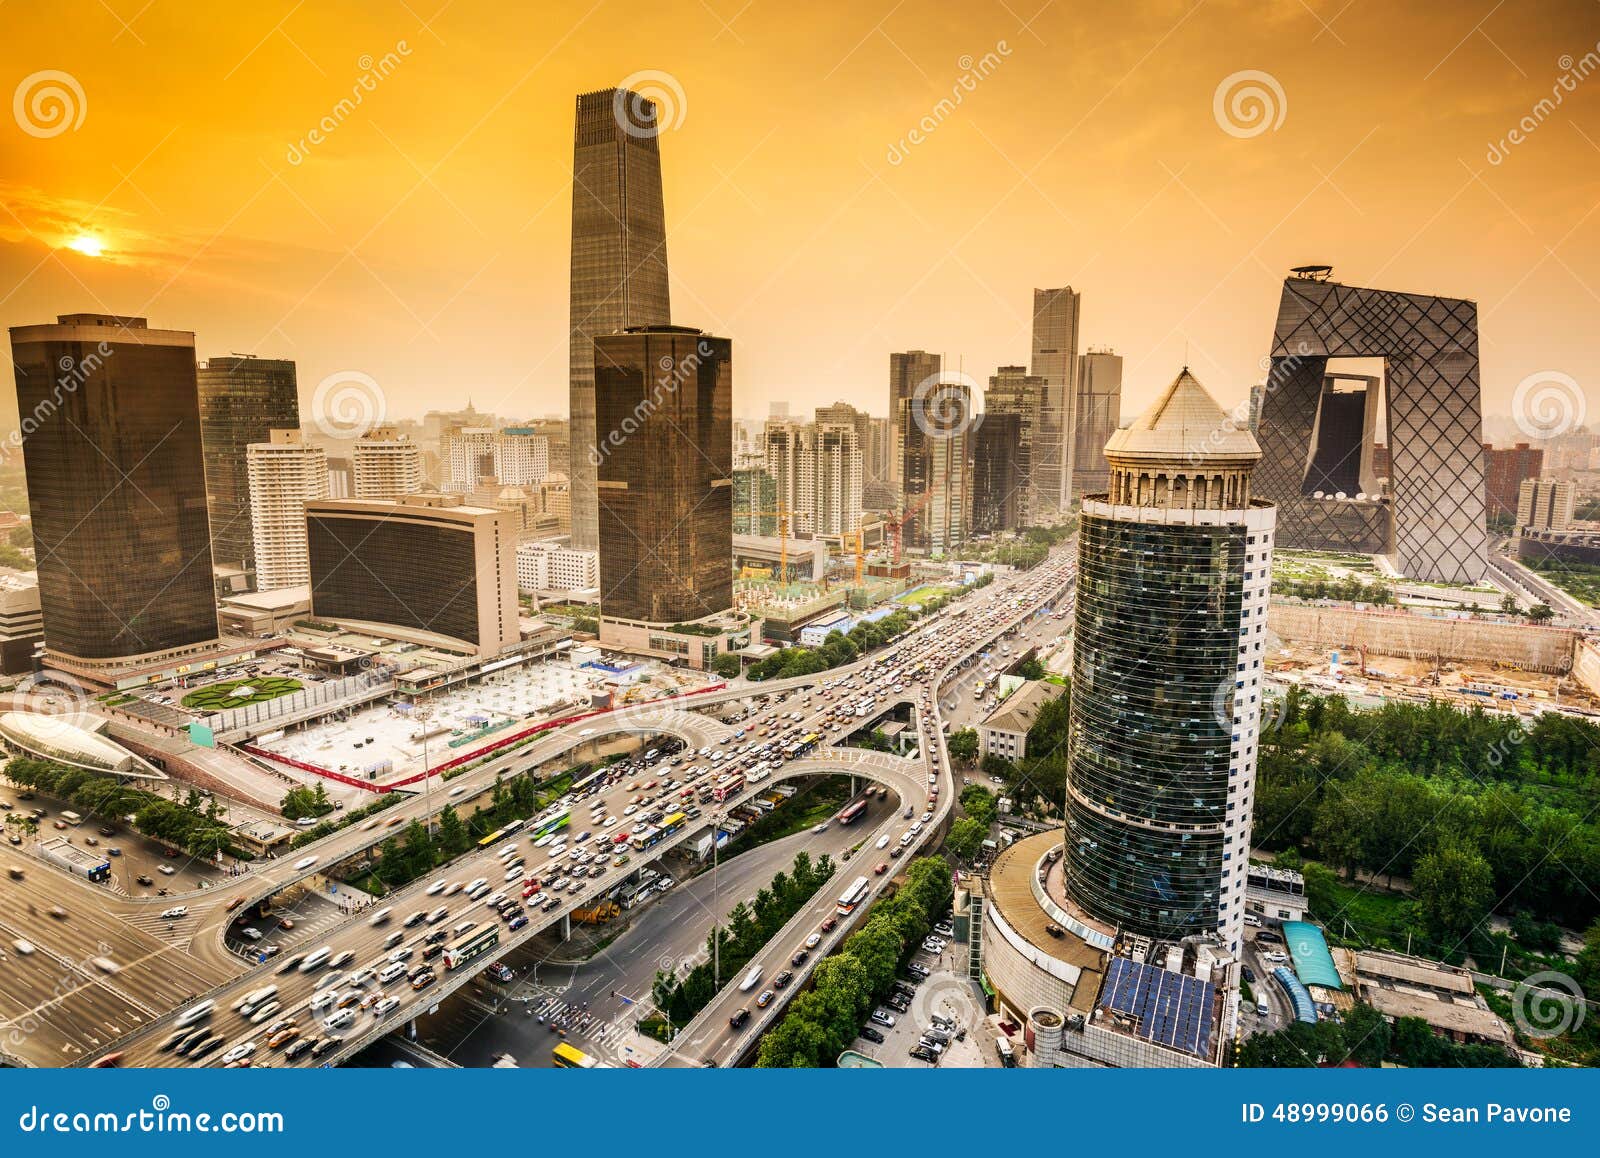 beijing, china financial district skyline